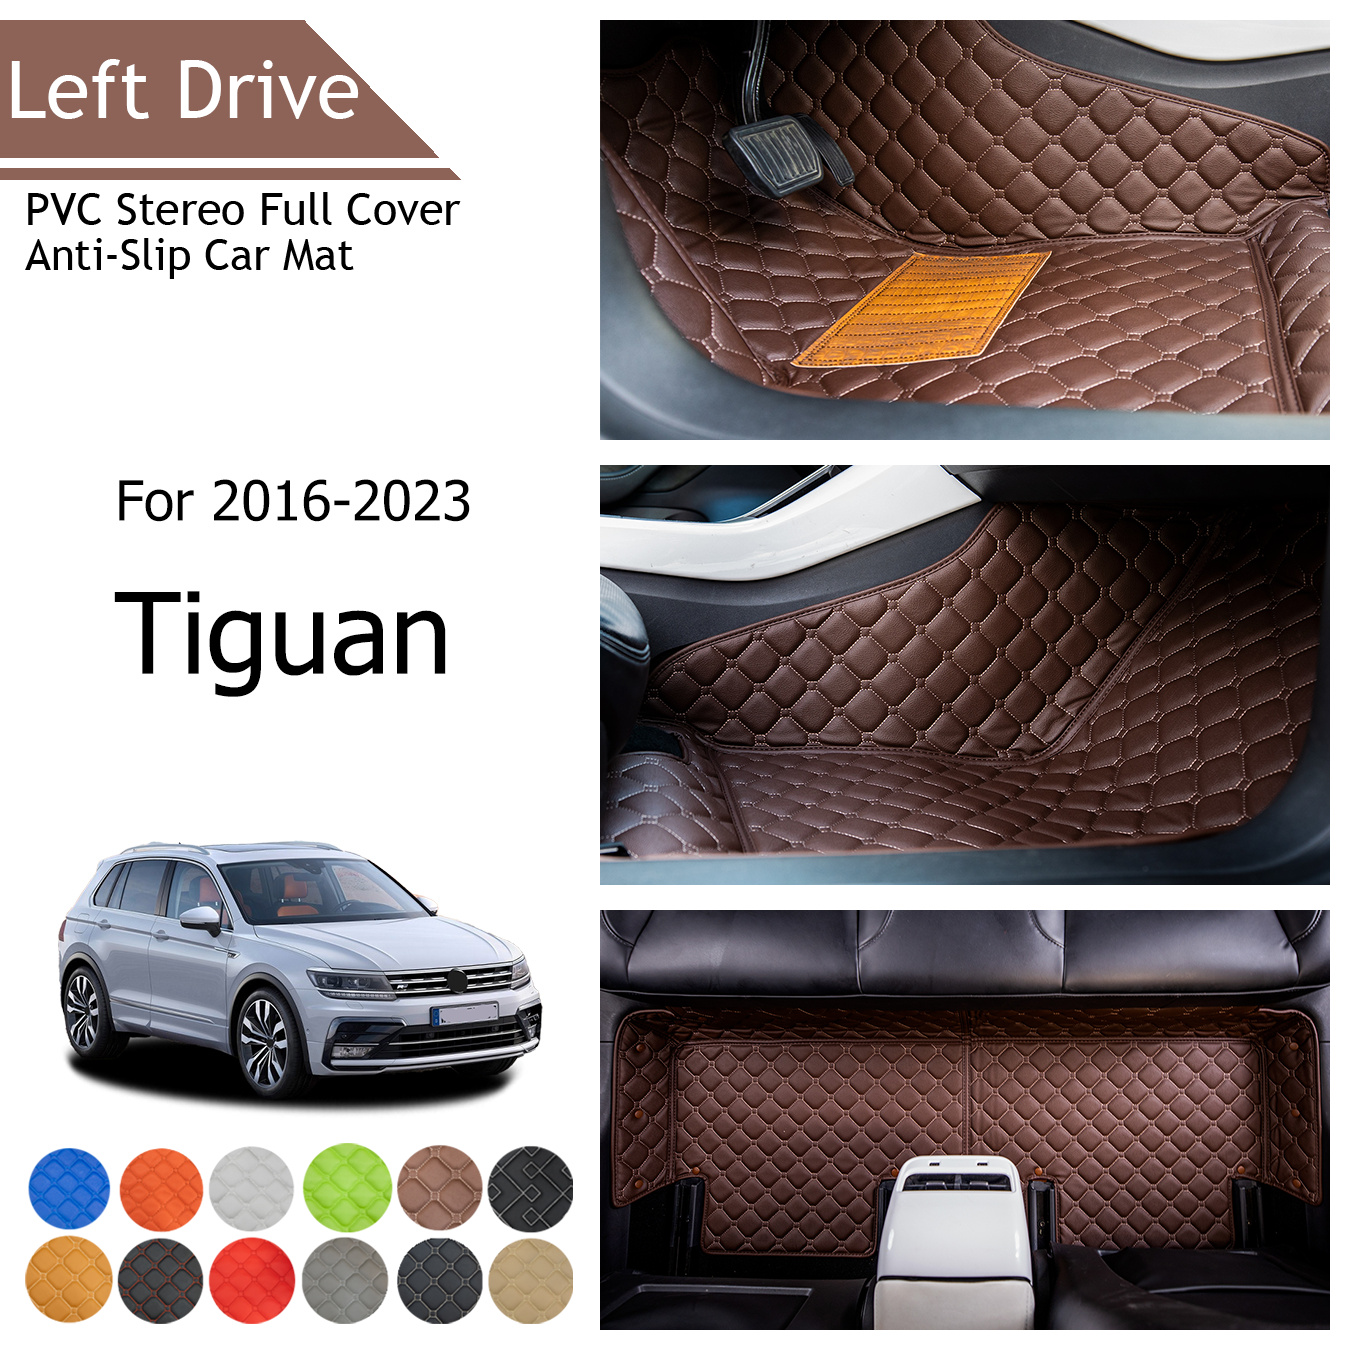 Car Cover For VW Volkswagen Tiguan SUV Outdoor Anti-UV Sun Shade